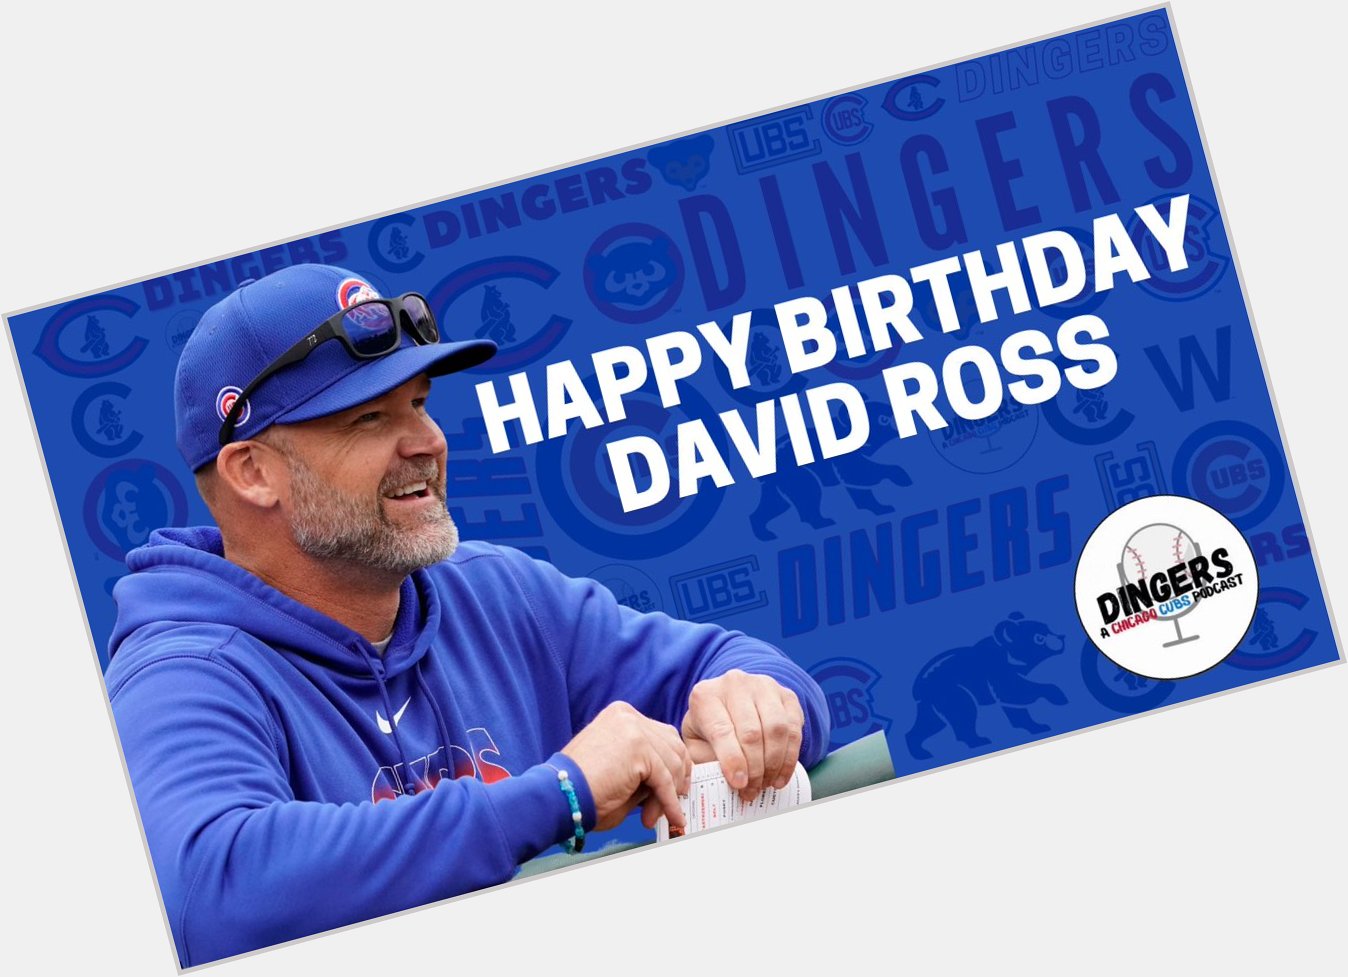 Happy Birthday David Ross 